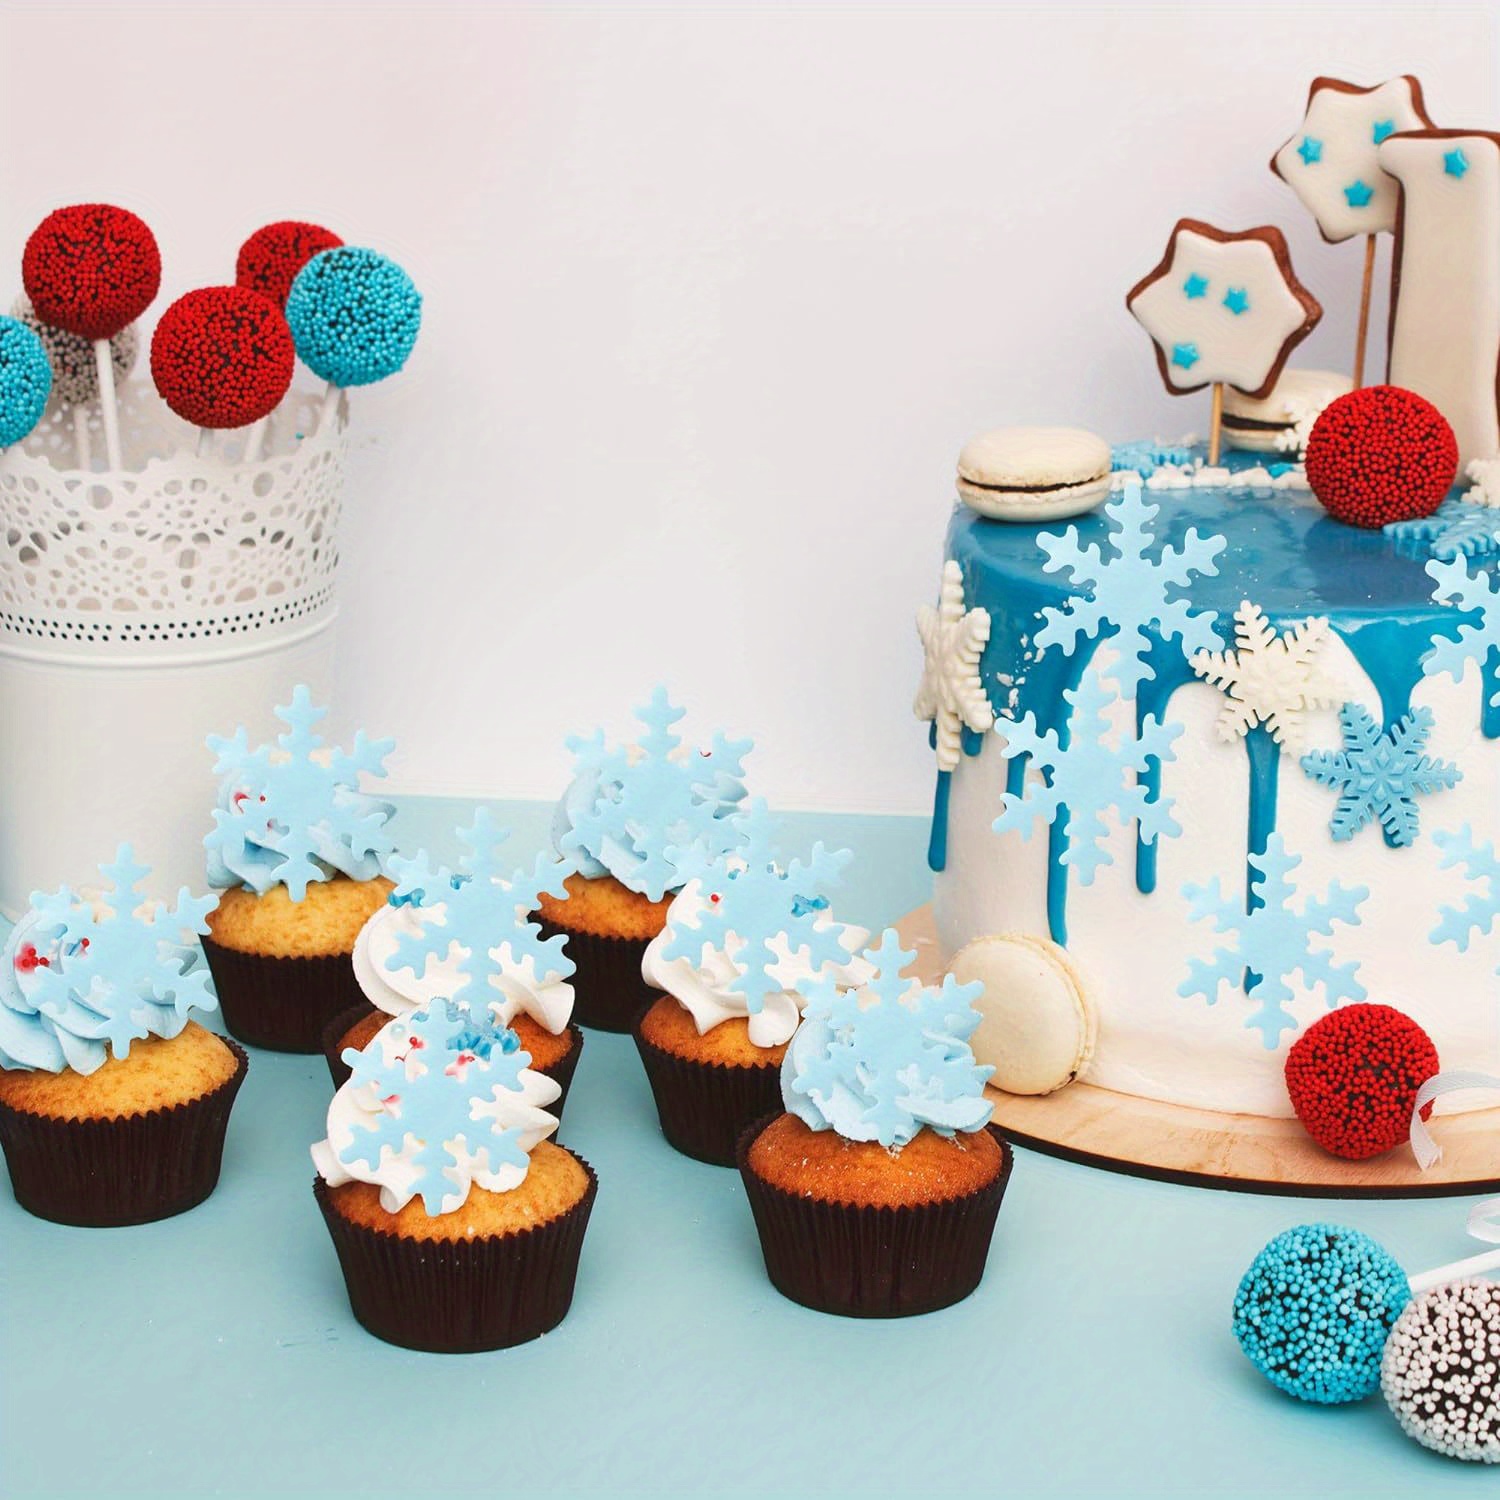 Decoración comestible para cupcakes de mariposa rosada | Insertos coloridos  para pasteles de dulces, cupcakes, galletas, decoración de helado, adornos